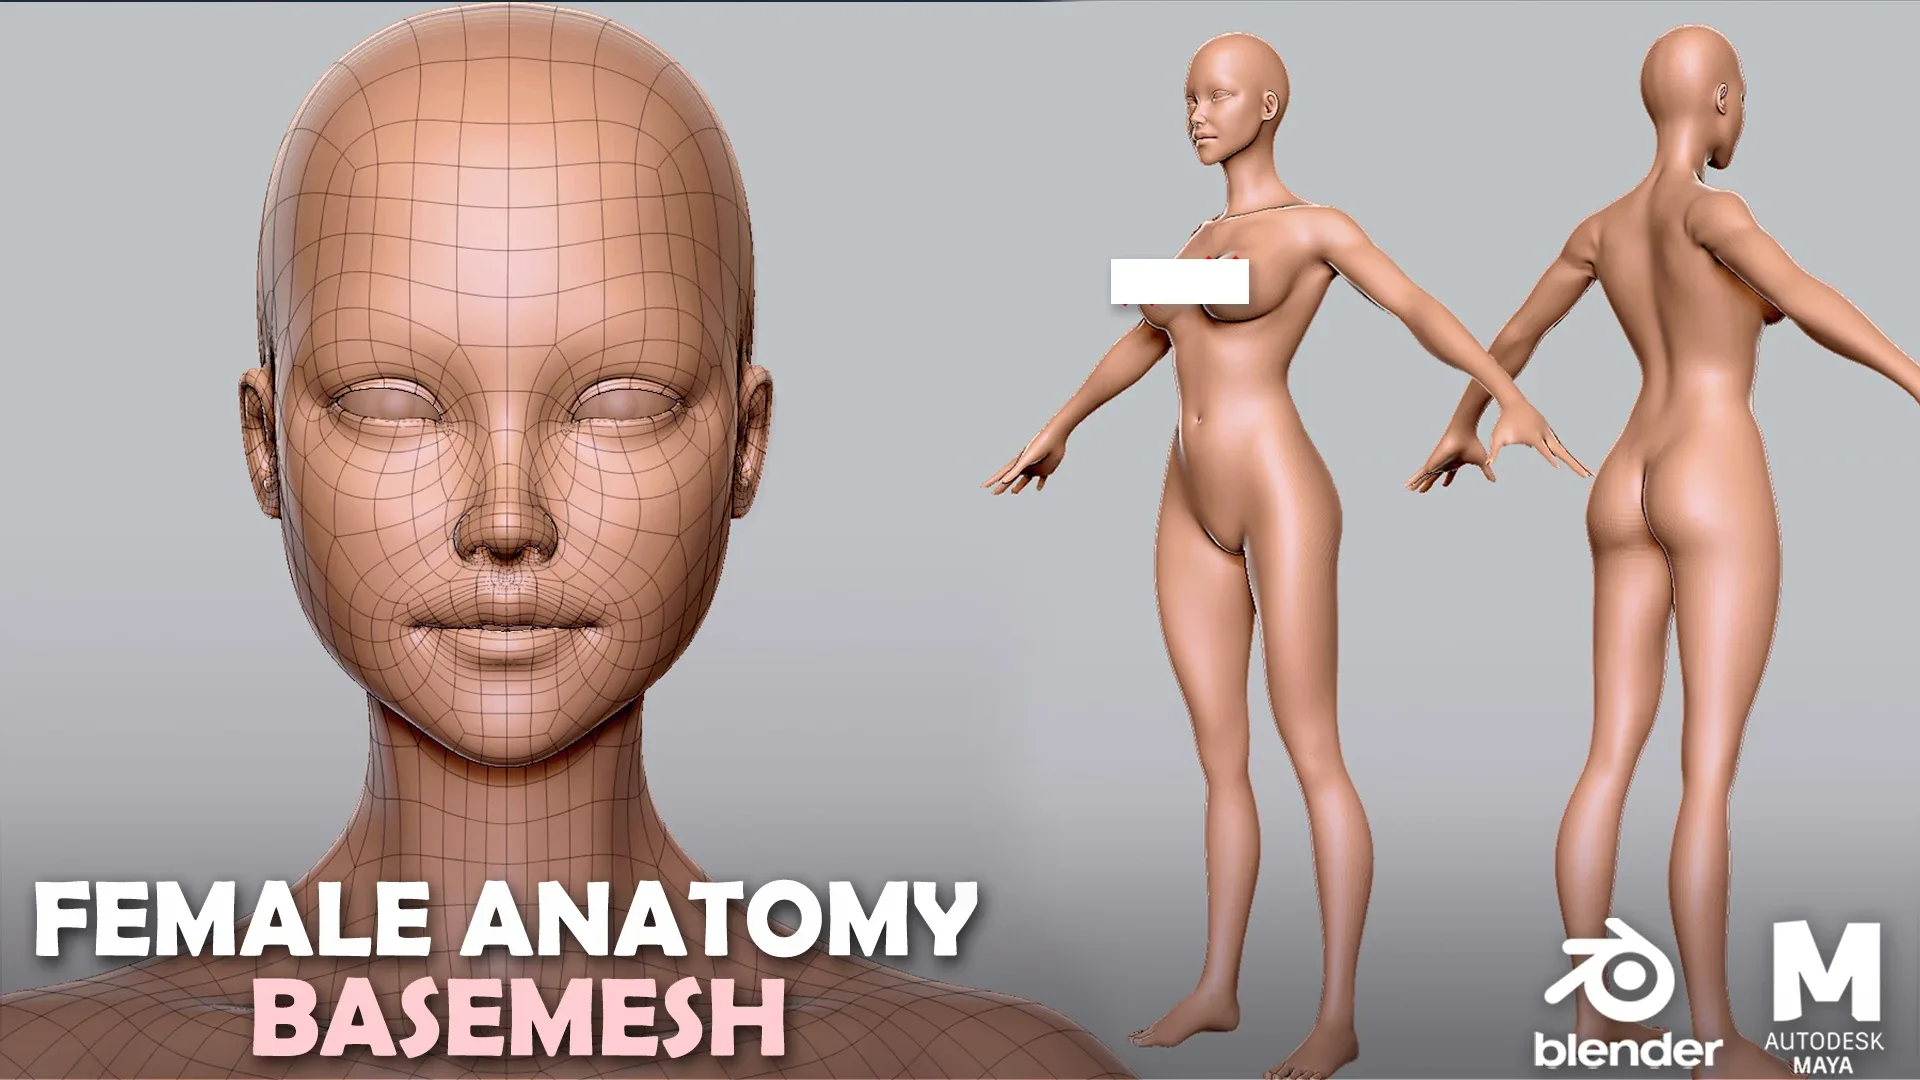 Blender - BaseMesh Female Anatomy - Topology + UV Map